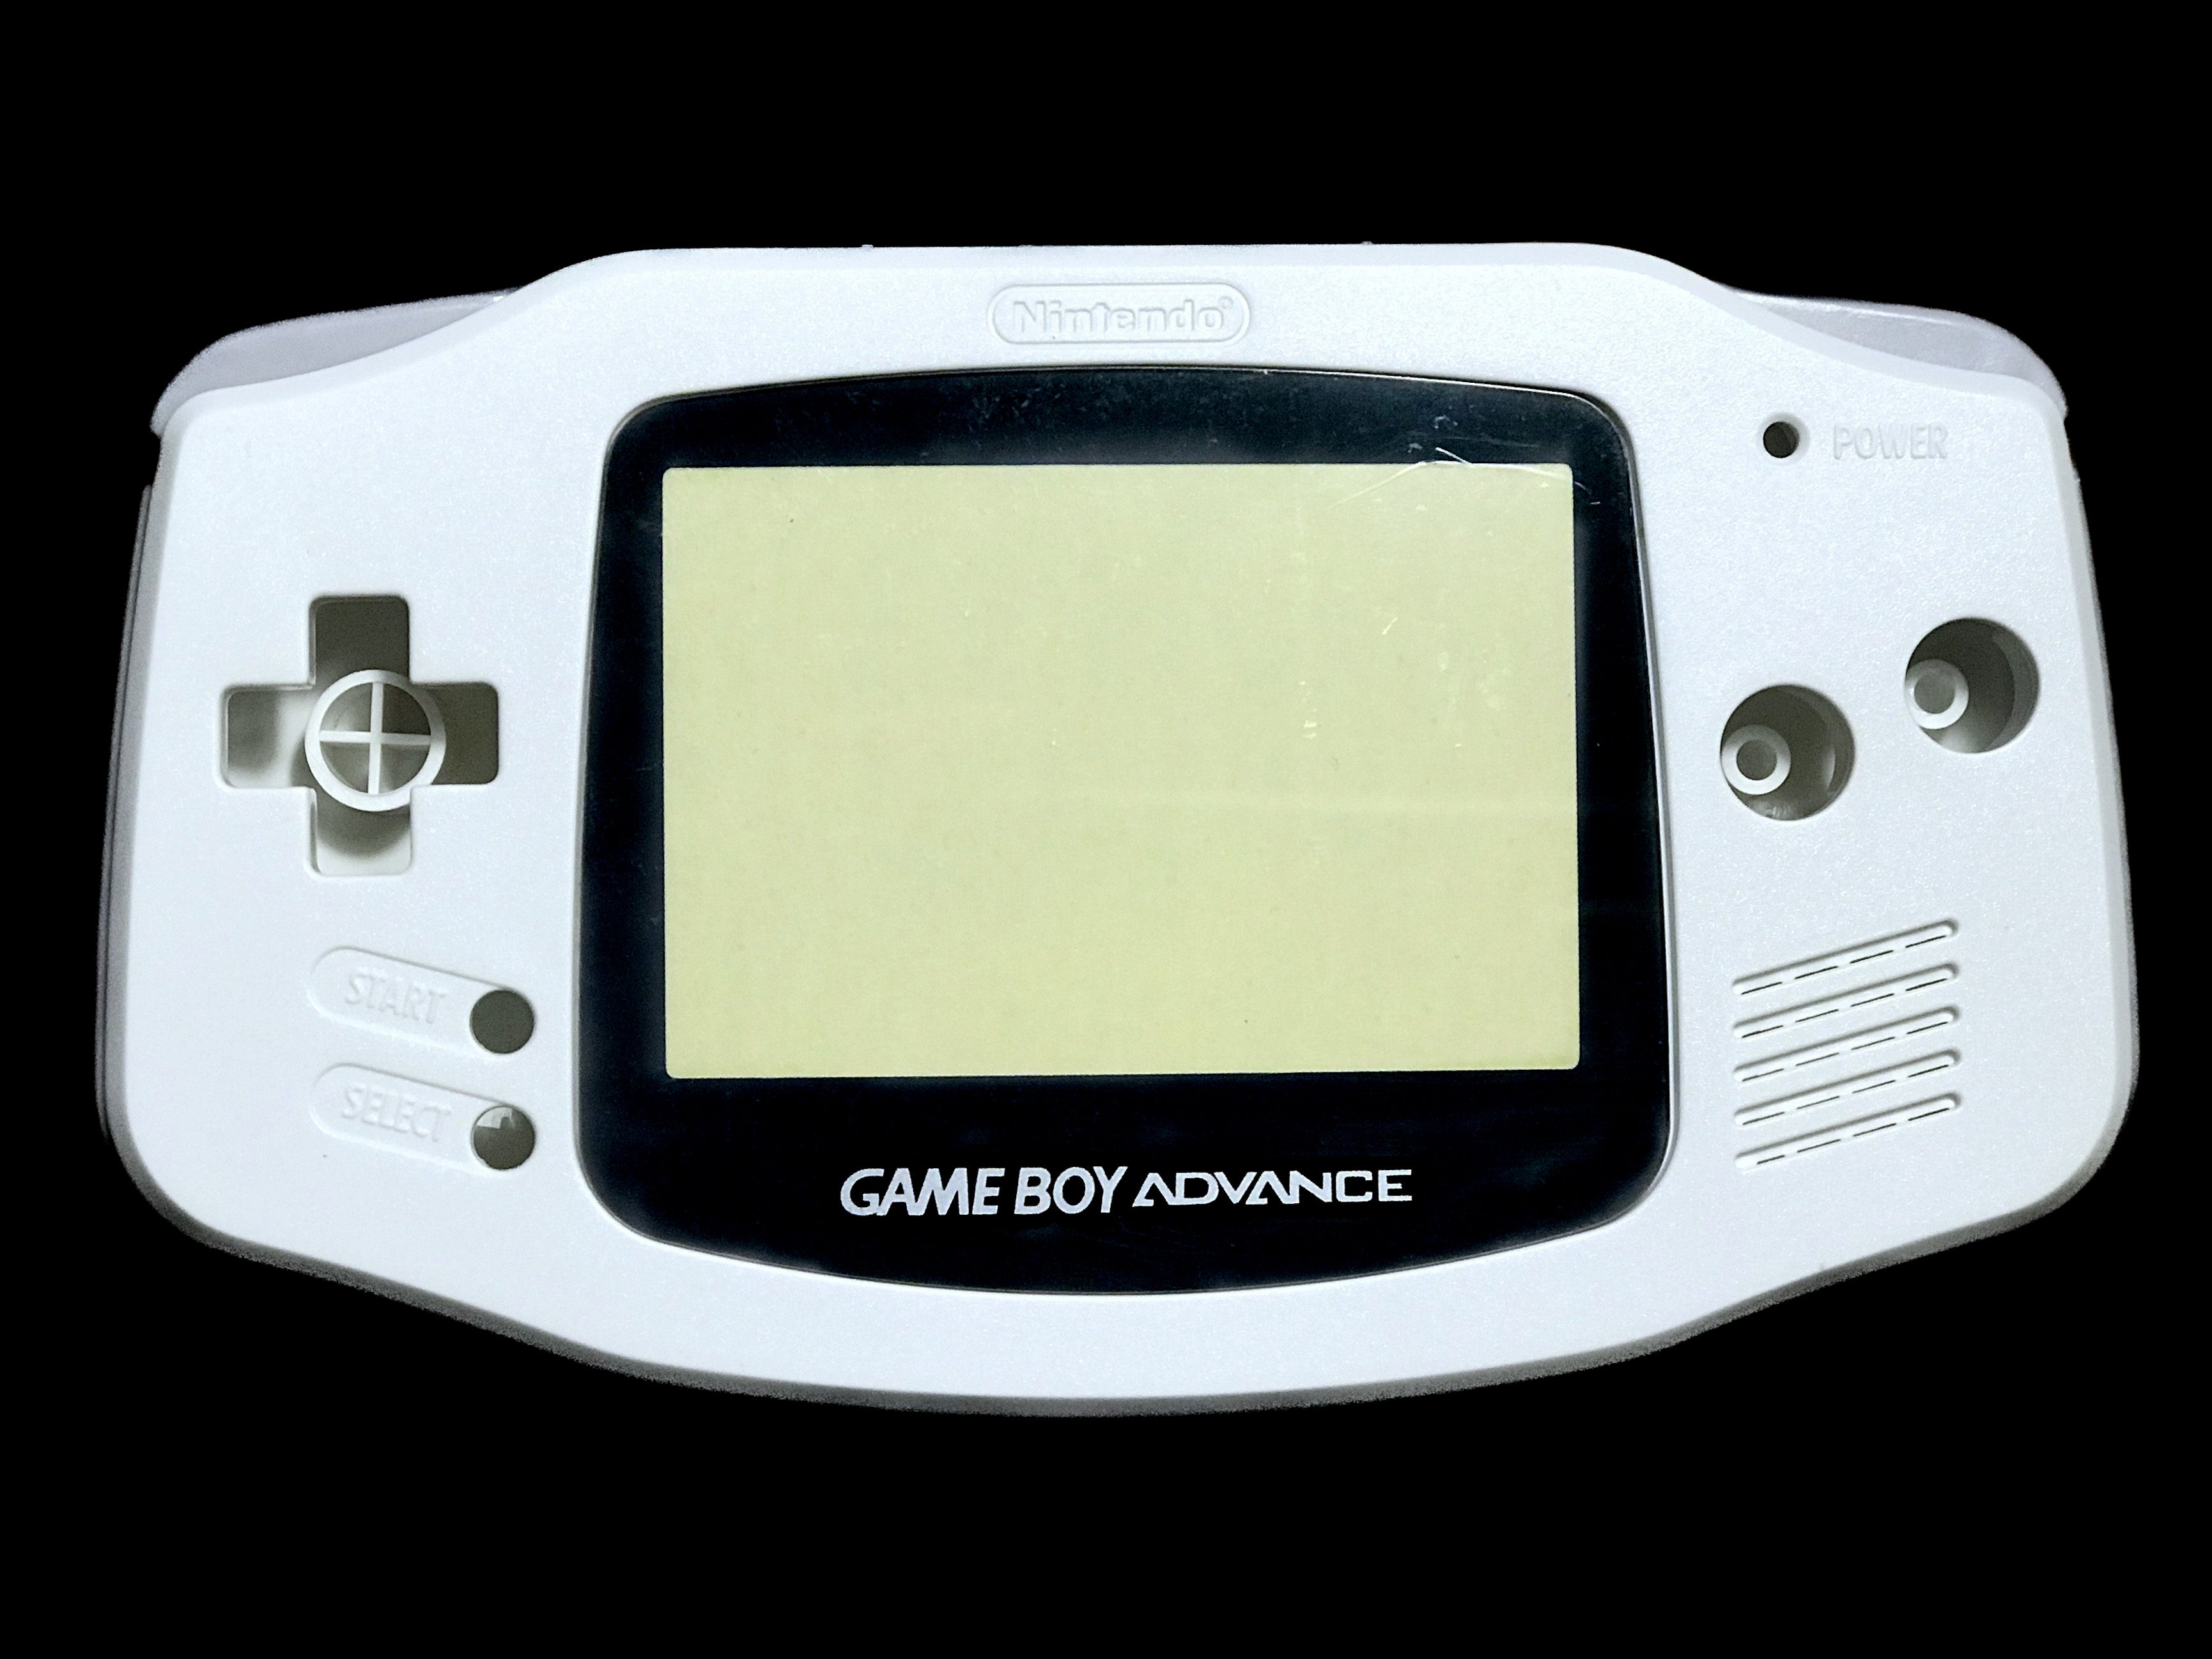 Game Boy Advance IPS Mod Console